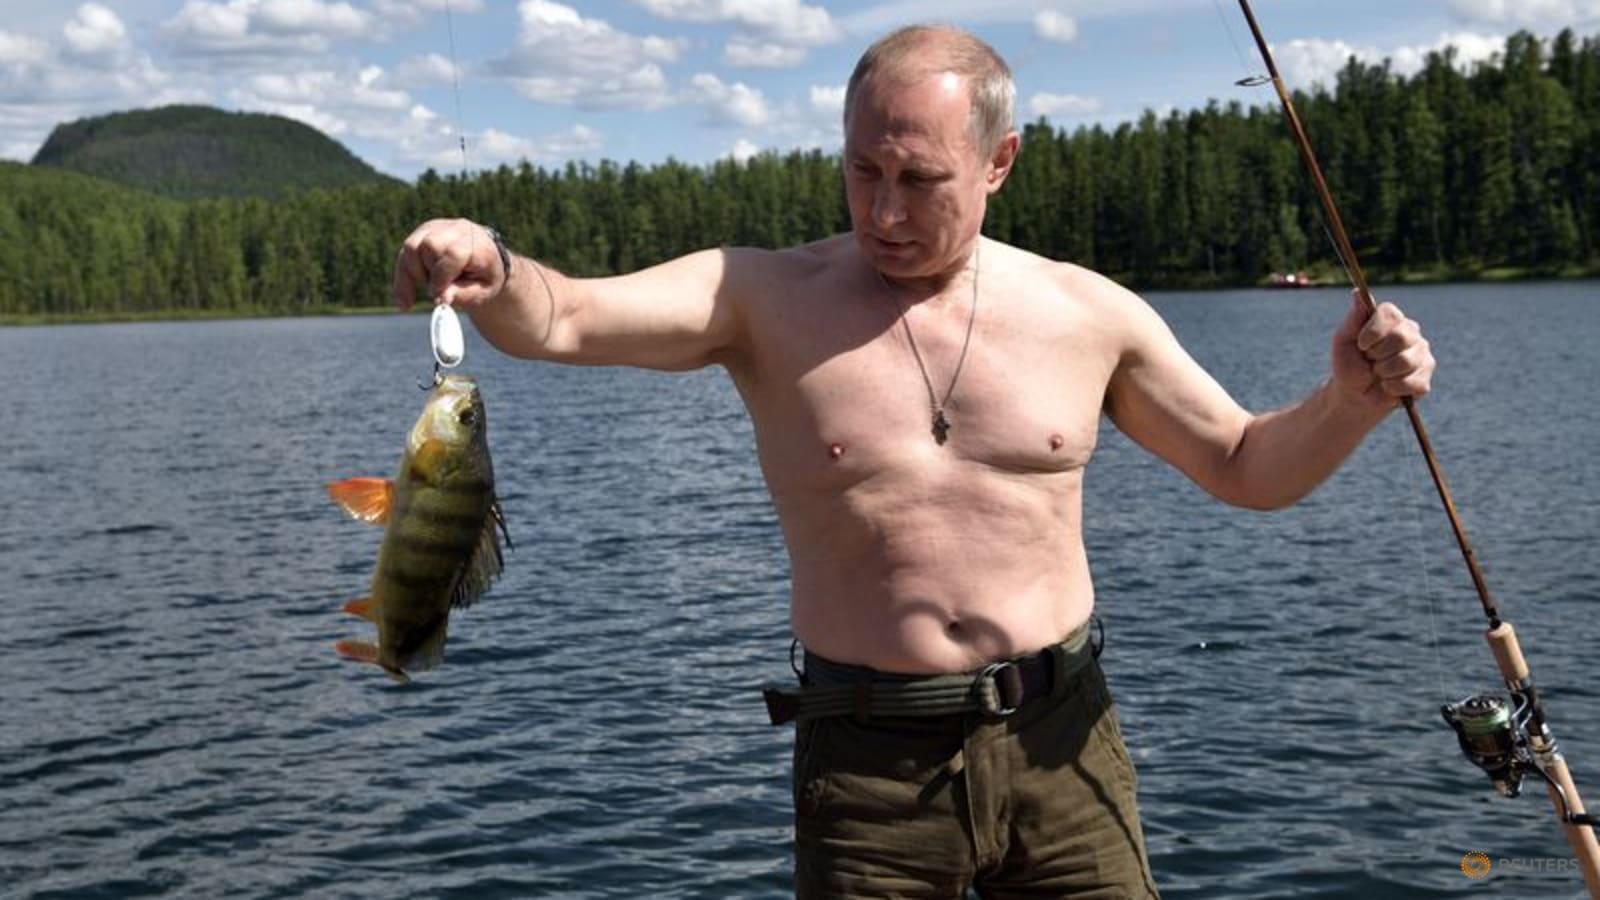 Leaders at G7 mock bare-chested horseback rider Putin